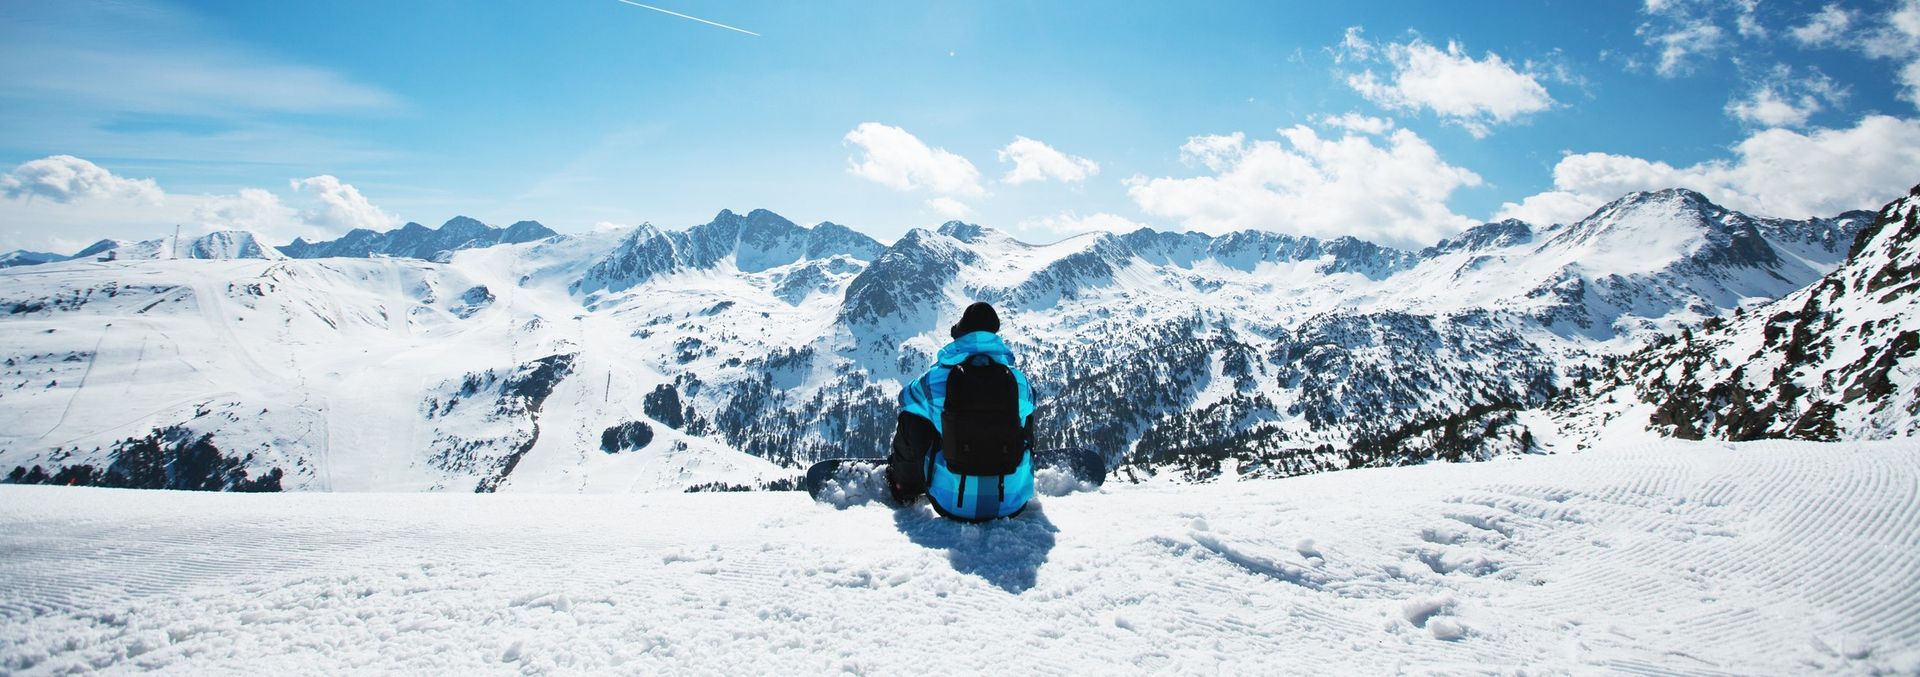 Find your next winter resort job in the Alps